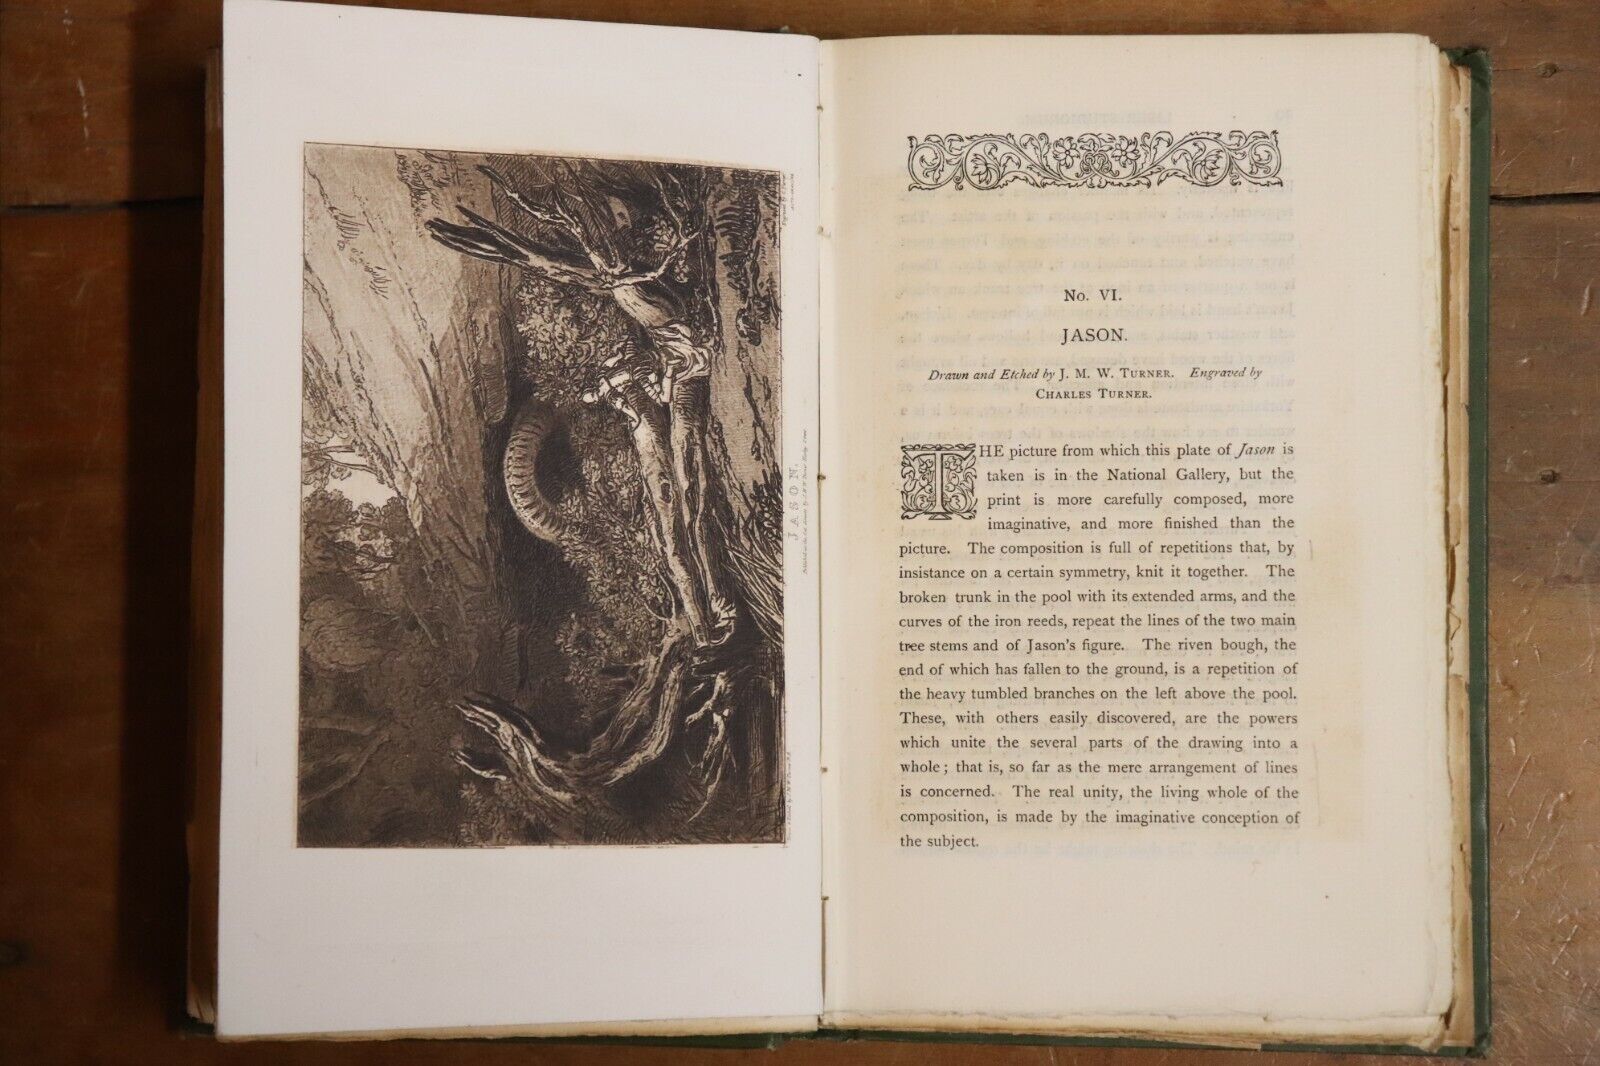 The Liber Studiorum of JMW Turner - 1885  - 1st Edition - Artist Book